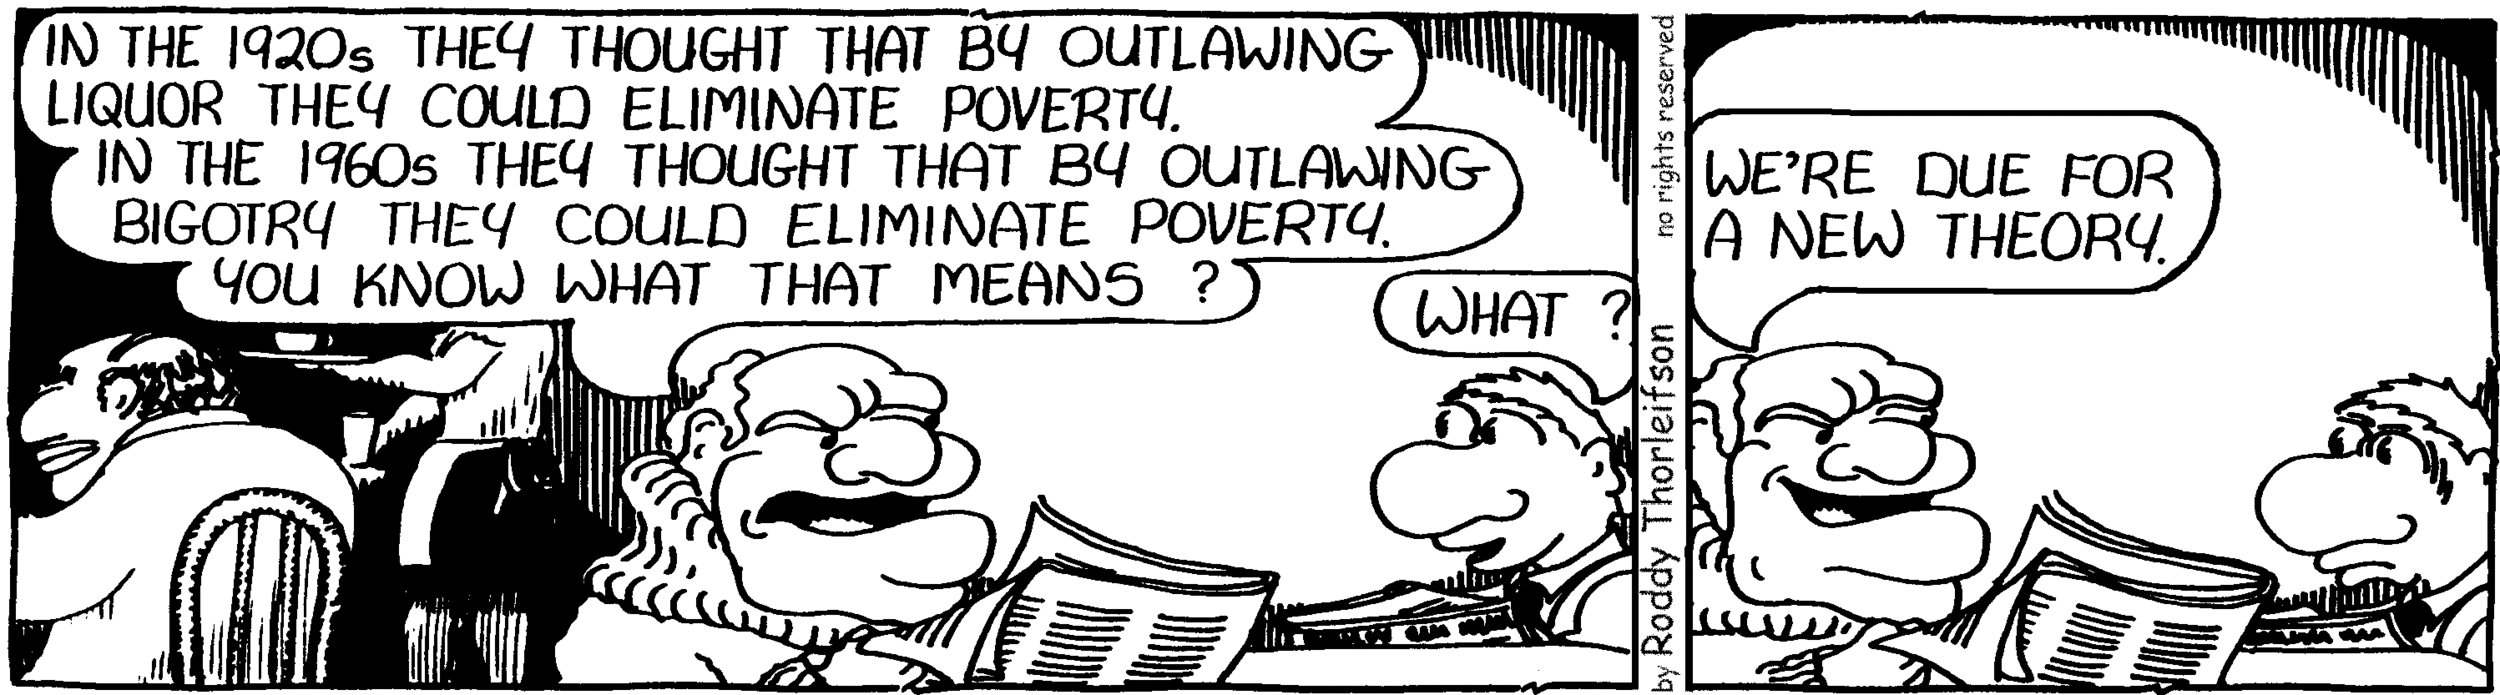 free cartoon law & order sociology poverty